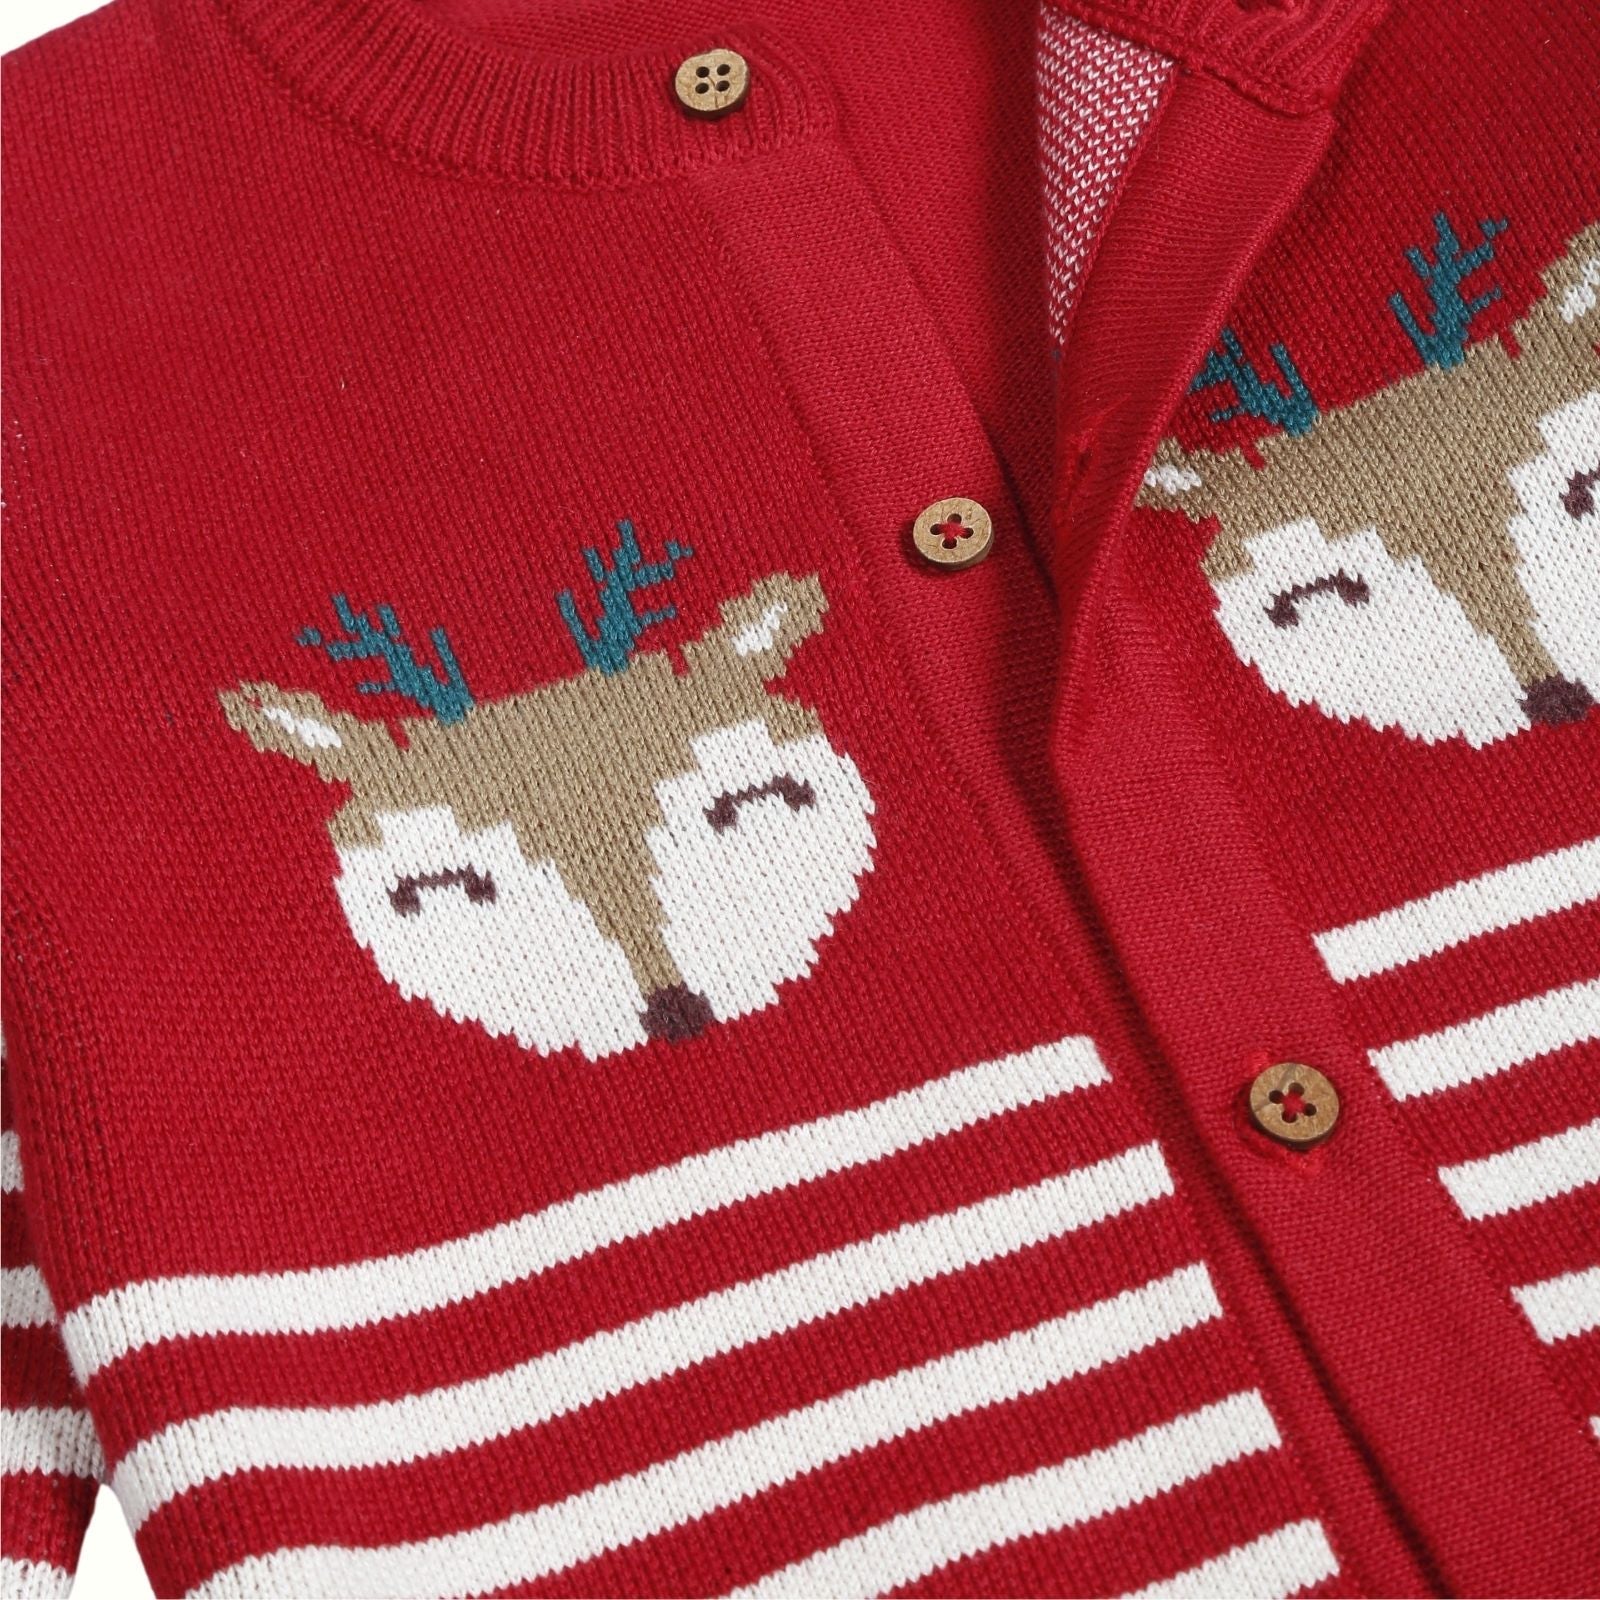 Greendeer Joyful Reindeer Jacquard 100% Cotton Sweater with Lower - Crème & Cherry Red - Set of 2